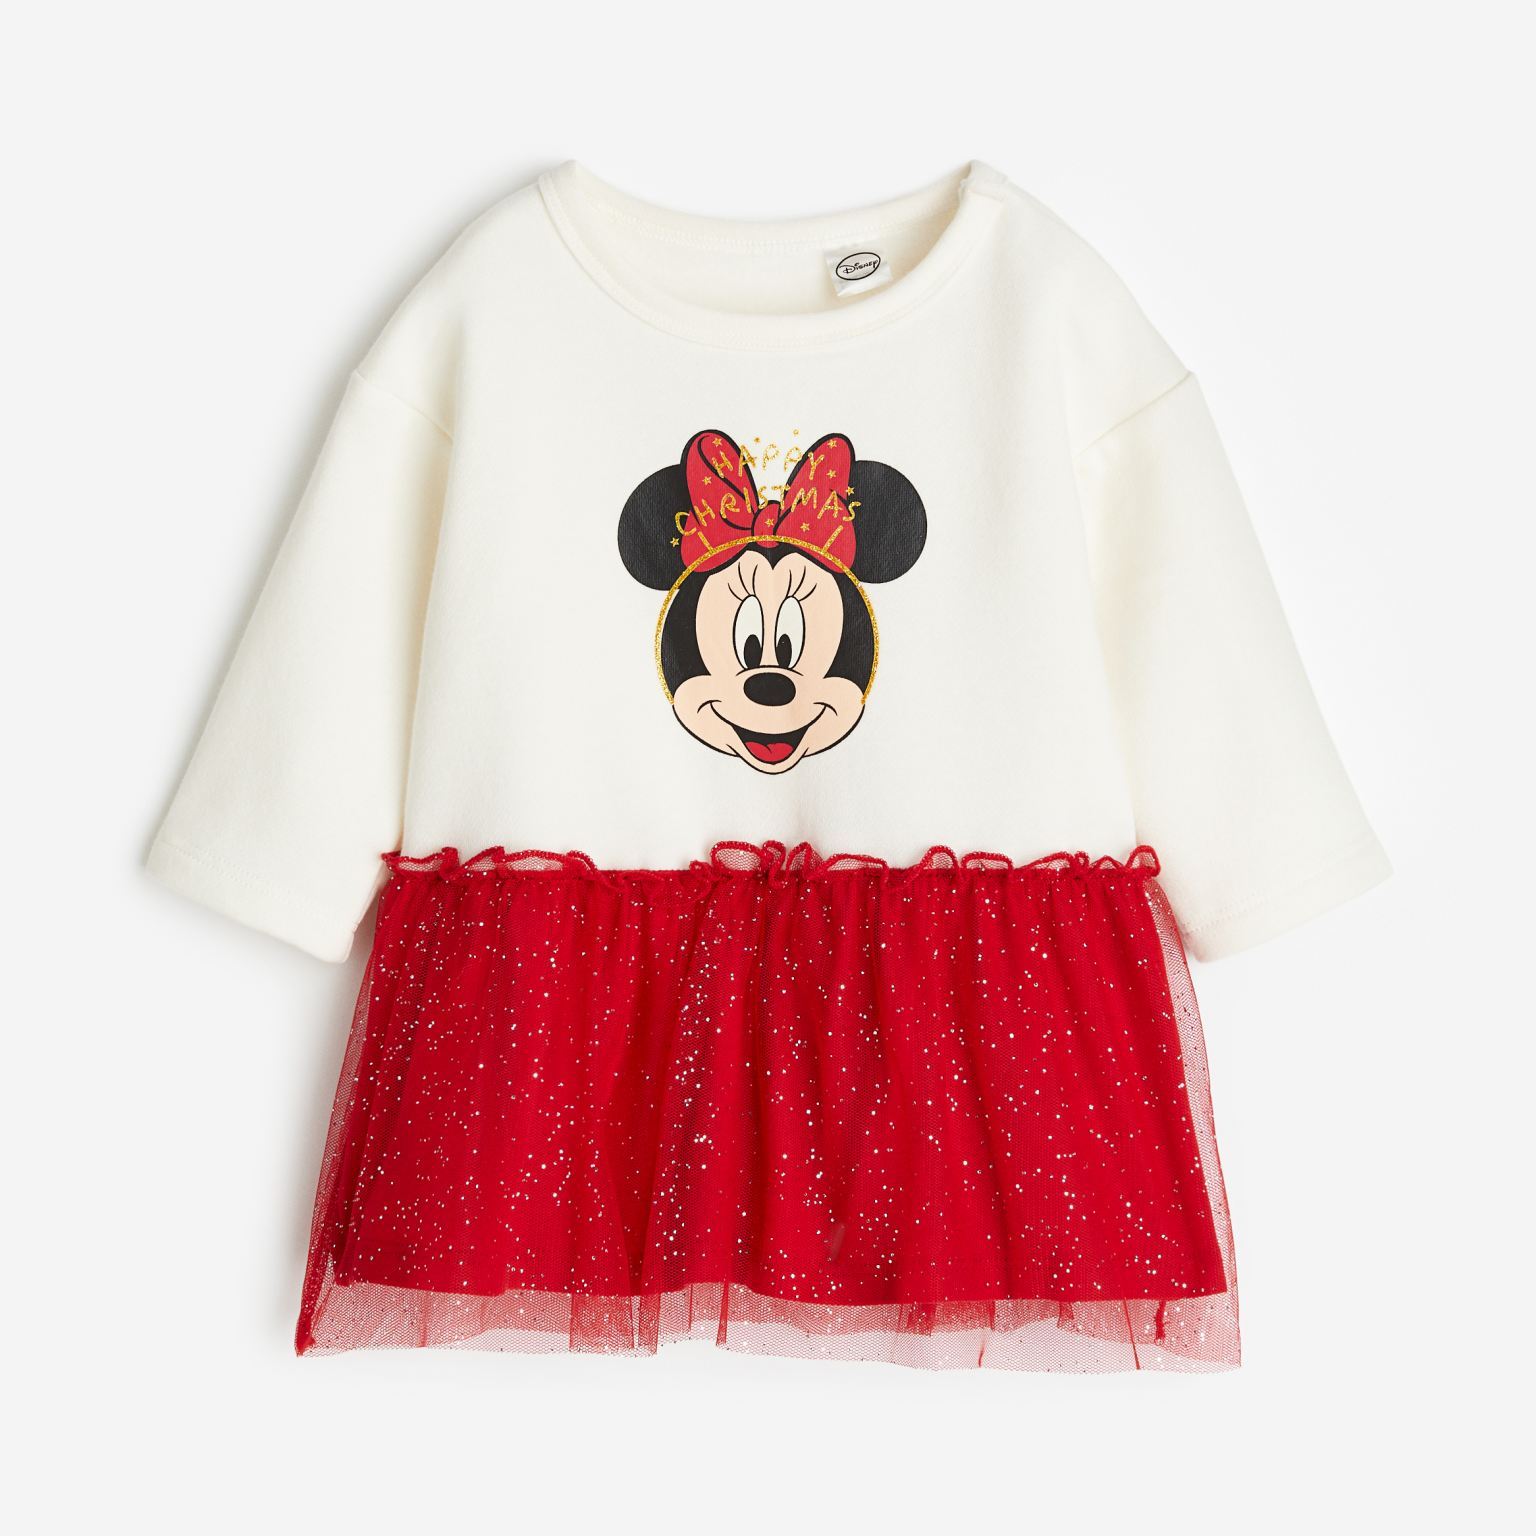 Платье H&M Disney Minnie Mouse Printed Tulle-skirt, белый/красный юбка футляр длинная из блестящего трикотажа